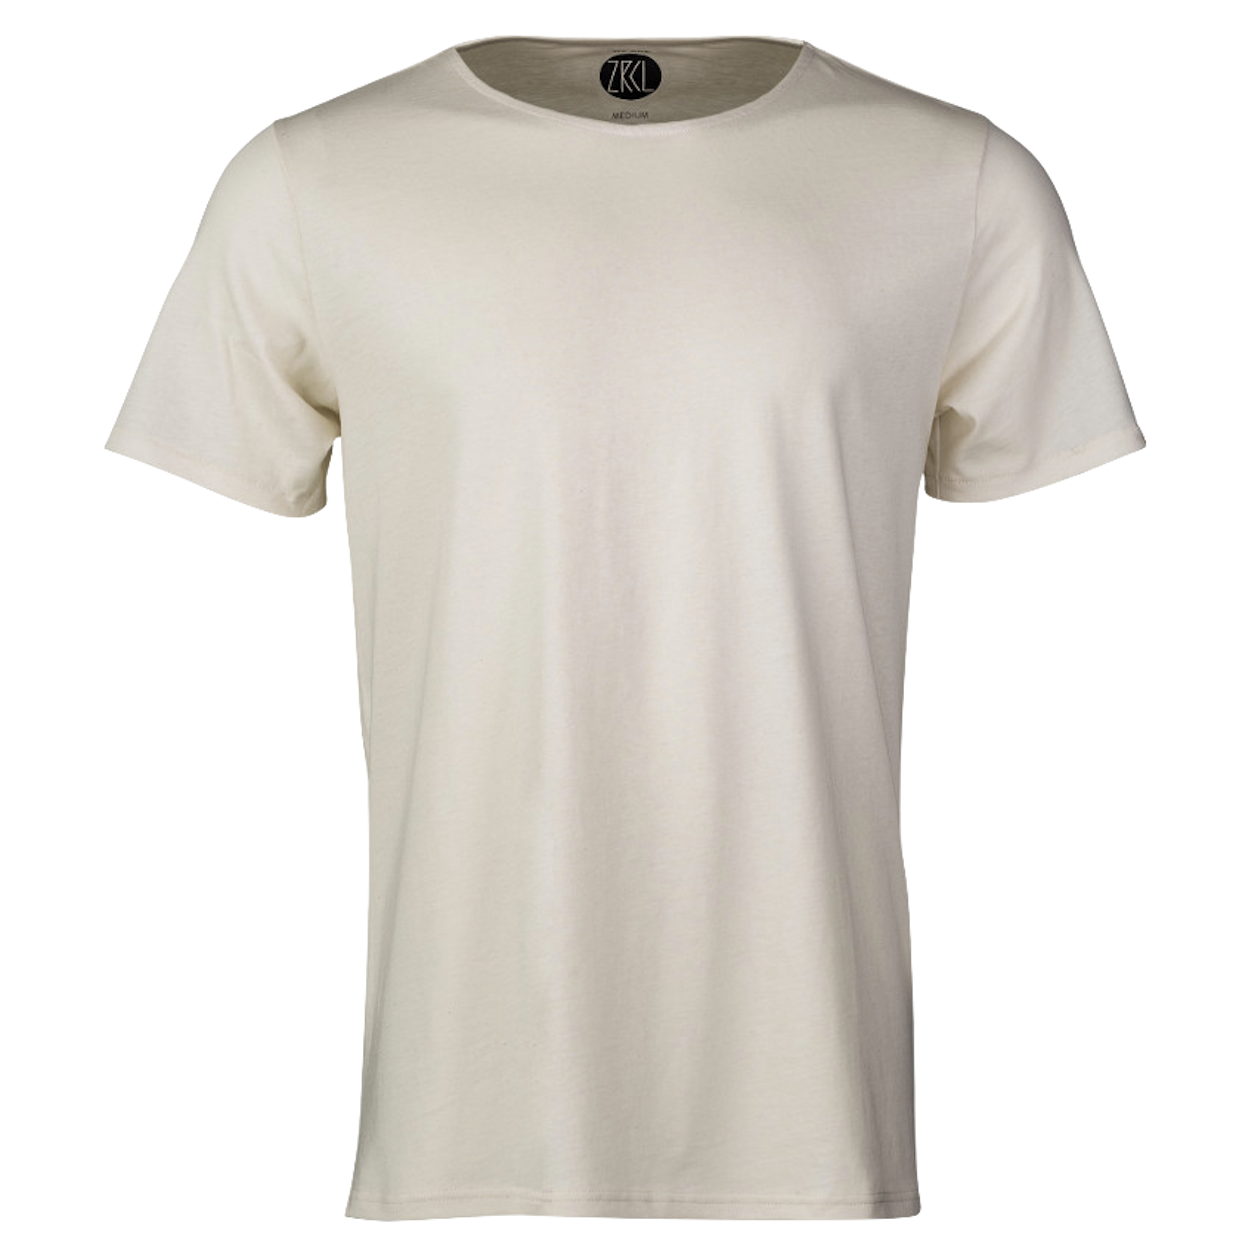 ZRCL ZRCL, M Basic Loose T-Shirt, natural, S